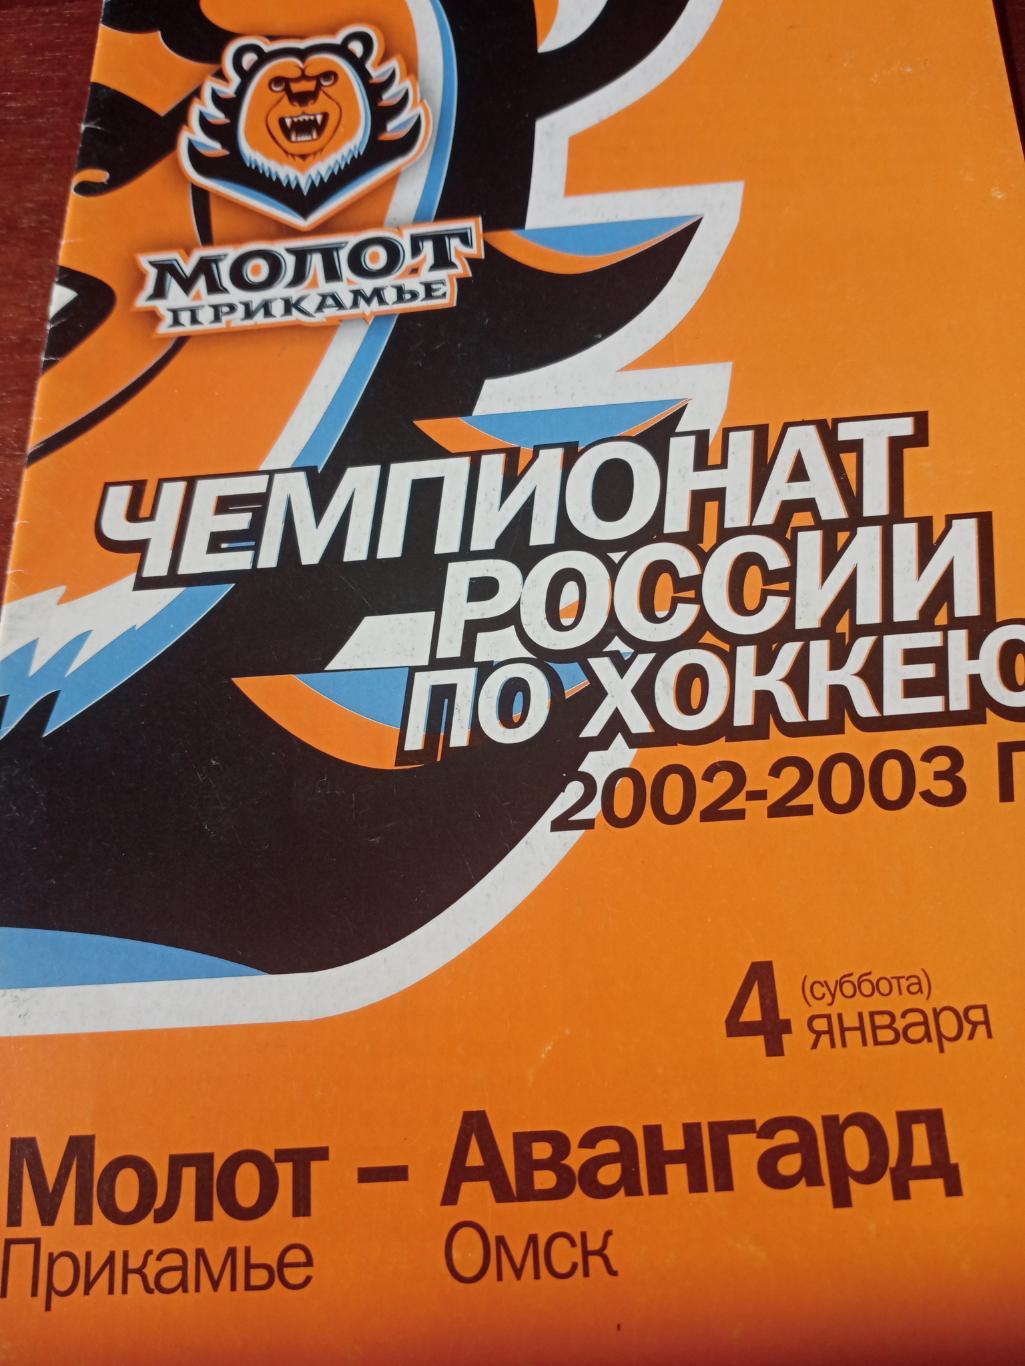 Молот Пермь - Авангард Омск. 4 января 2003 год